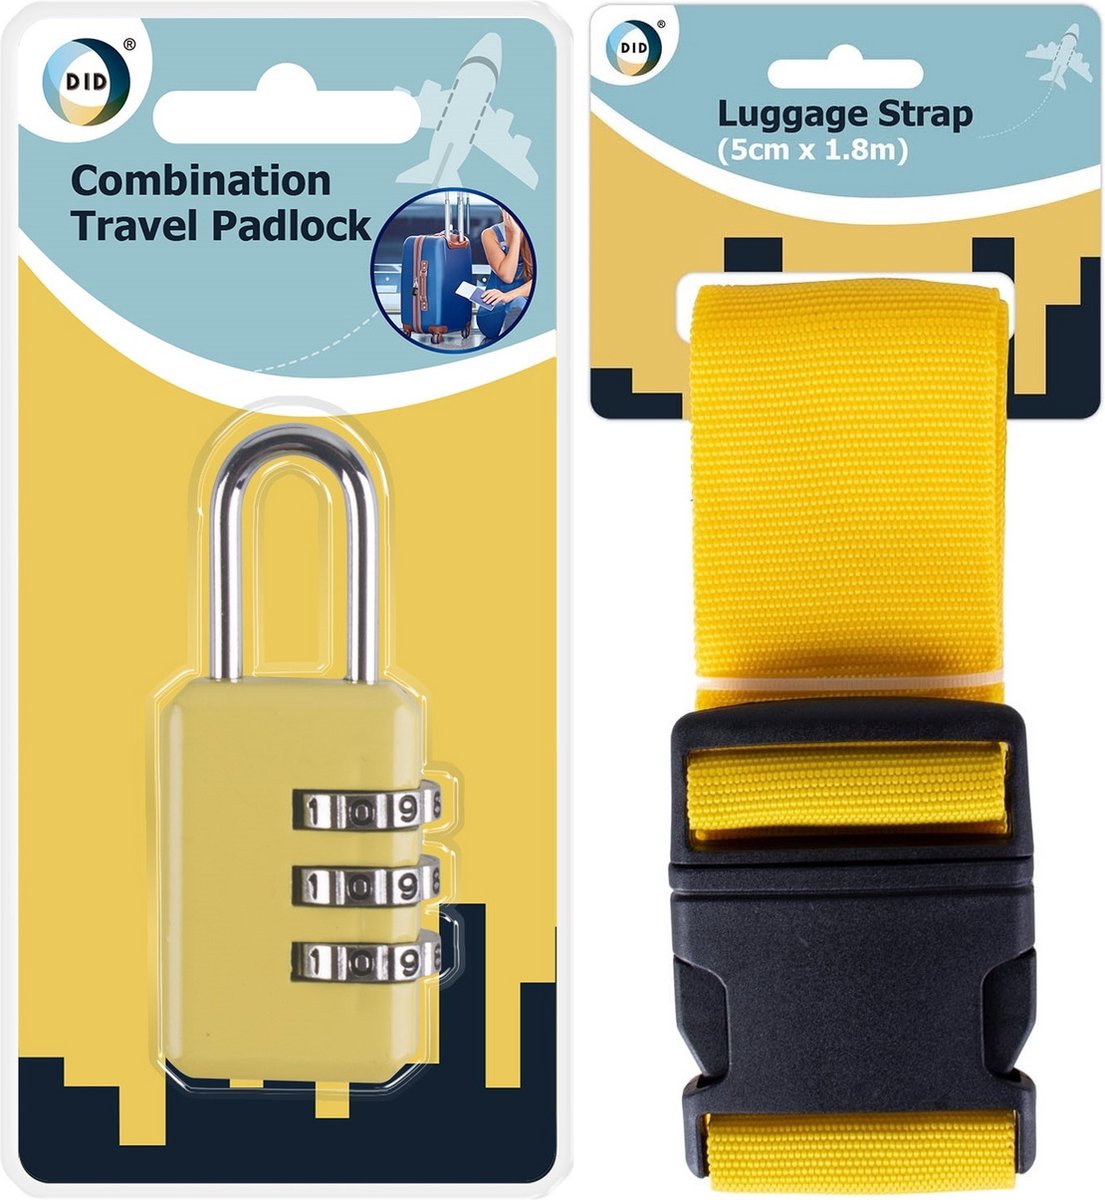 Bagageslot/cijferslot en kofferriem set voor reistassen en koffers - geel - veilig op reis - DID